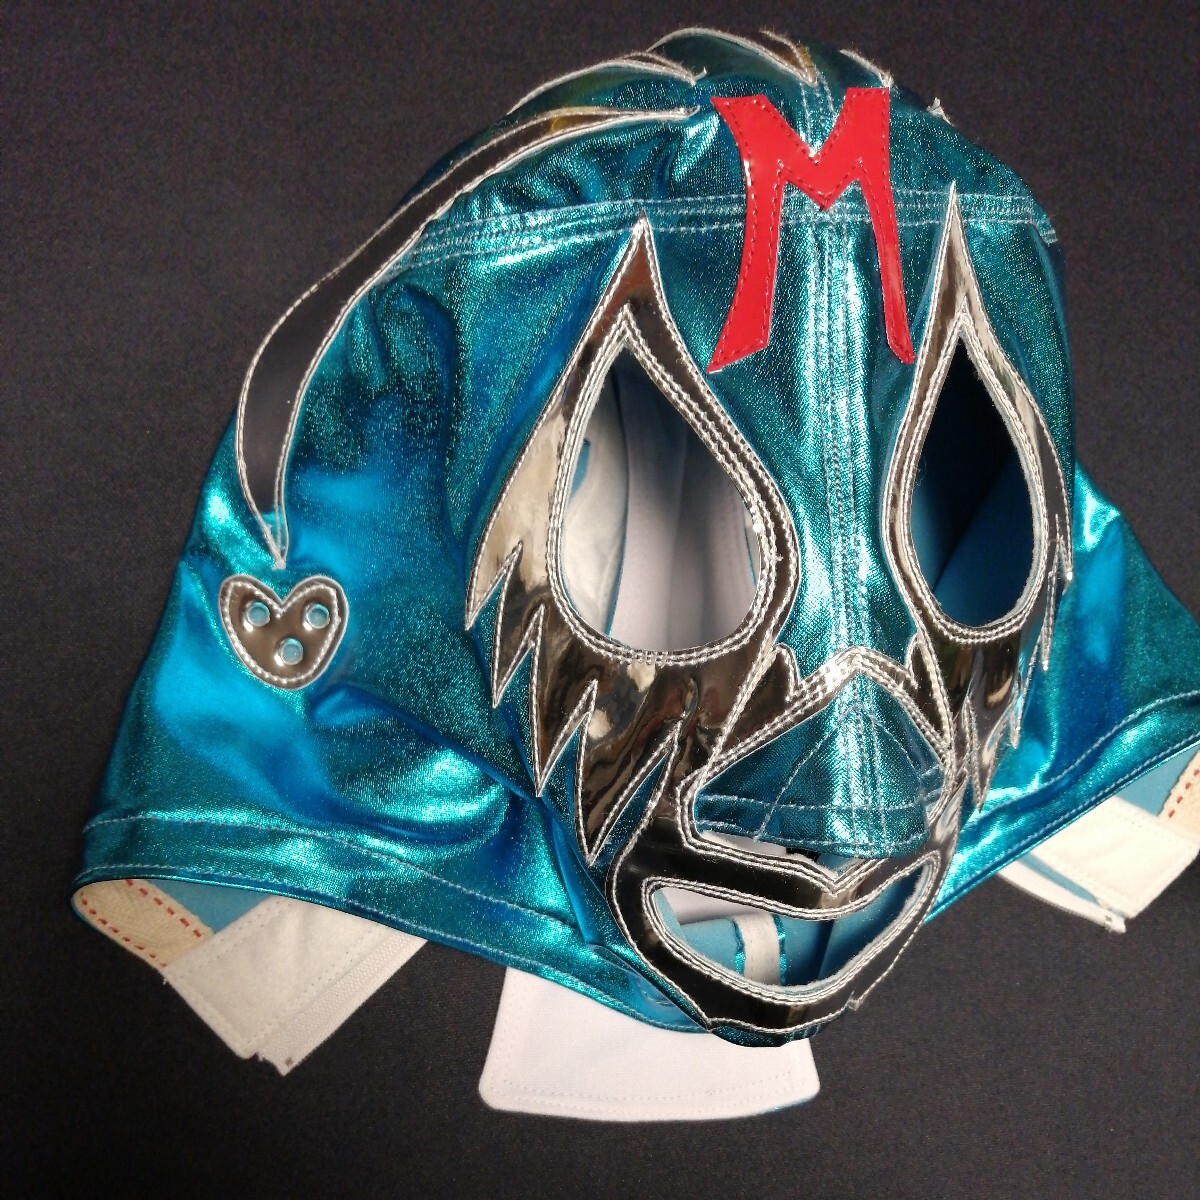  Mill * mascara s light blue special PV mask world strongest ta Gree g war model Showa Retro 